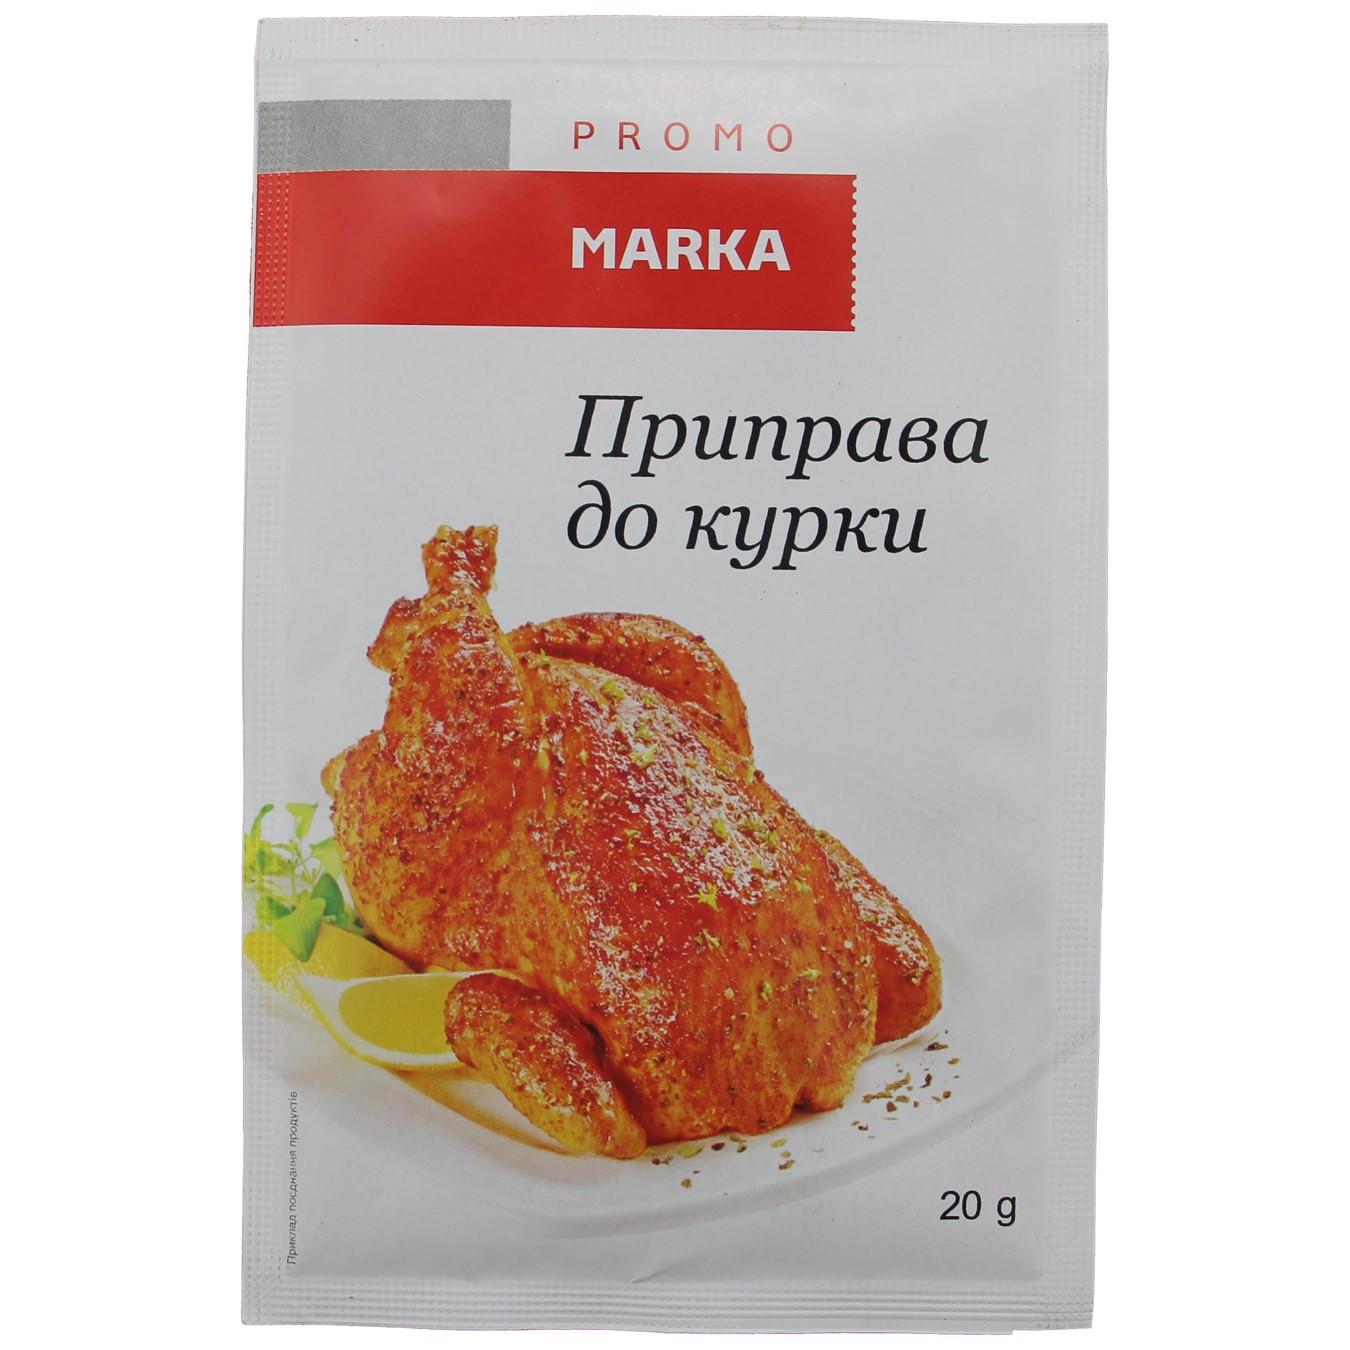 Marka Promo Spice for Chicken 20g